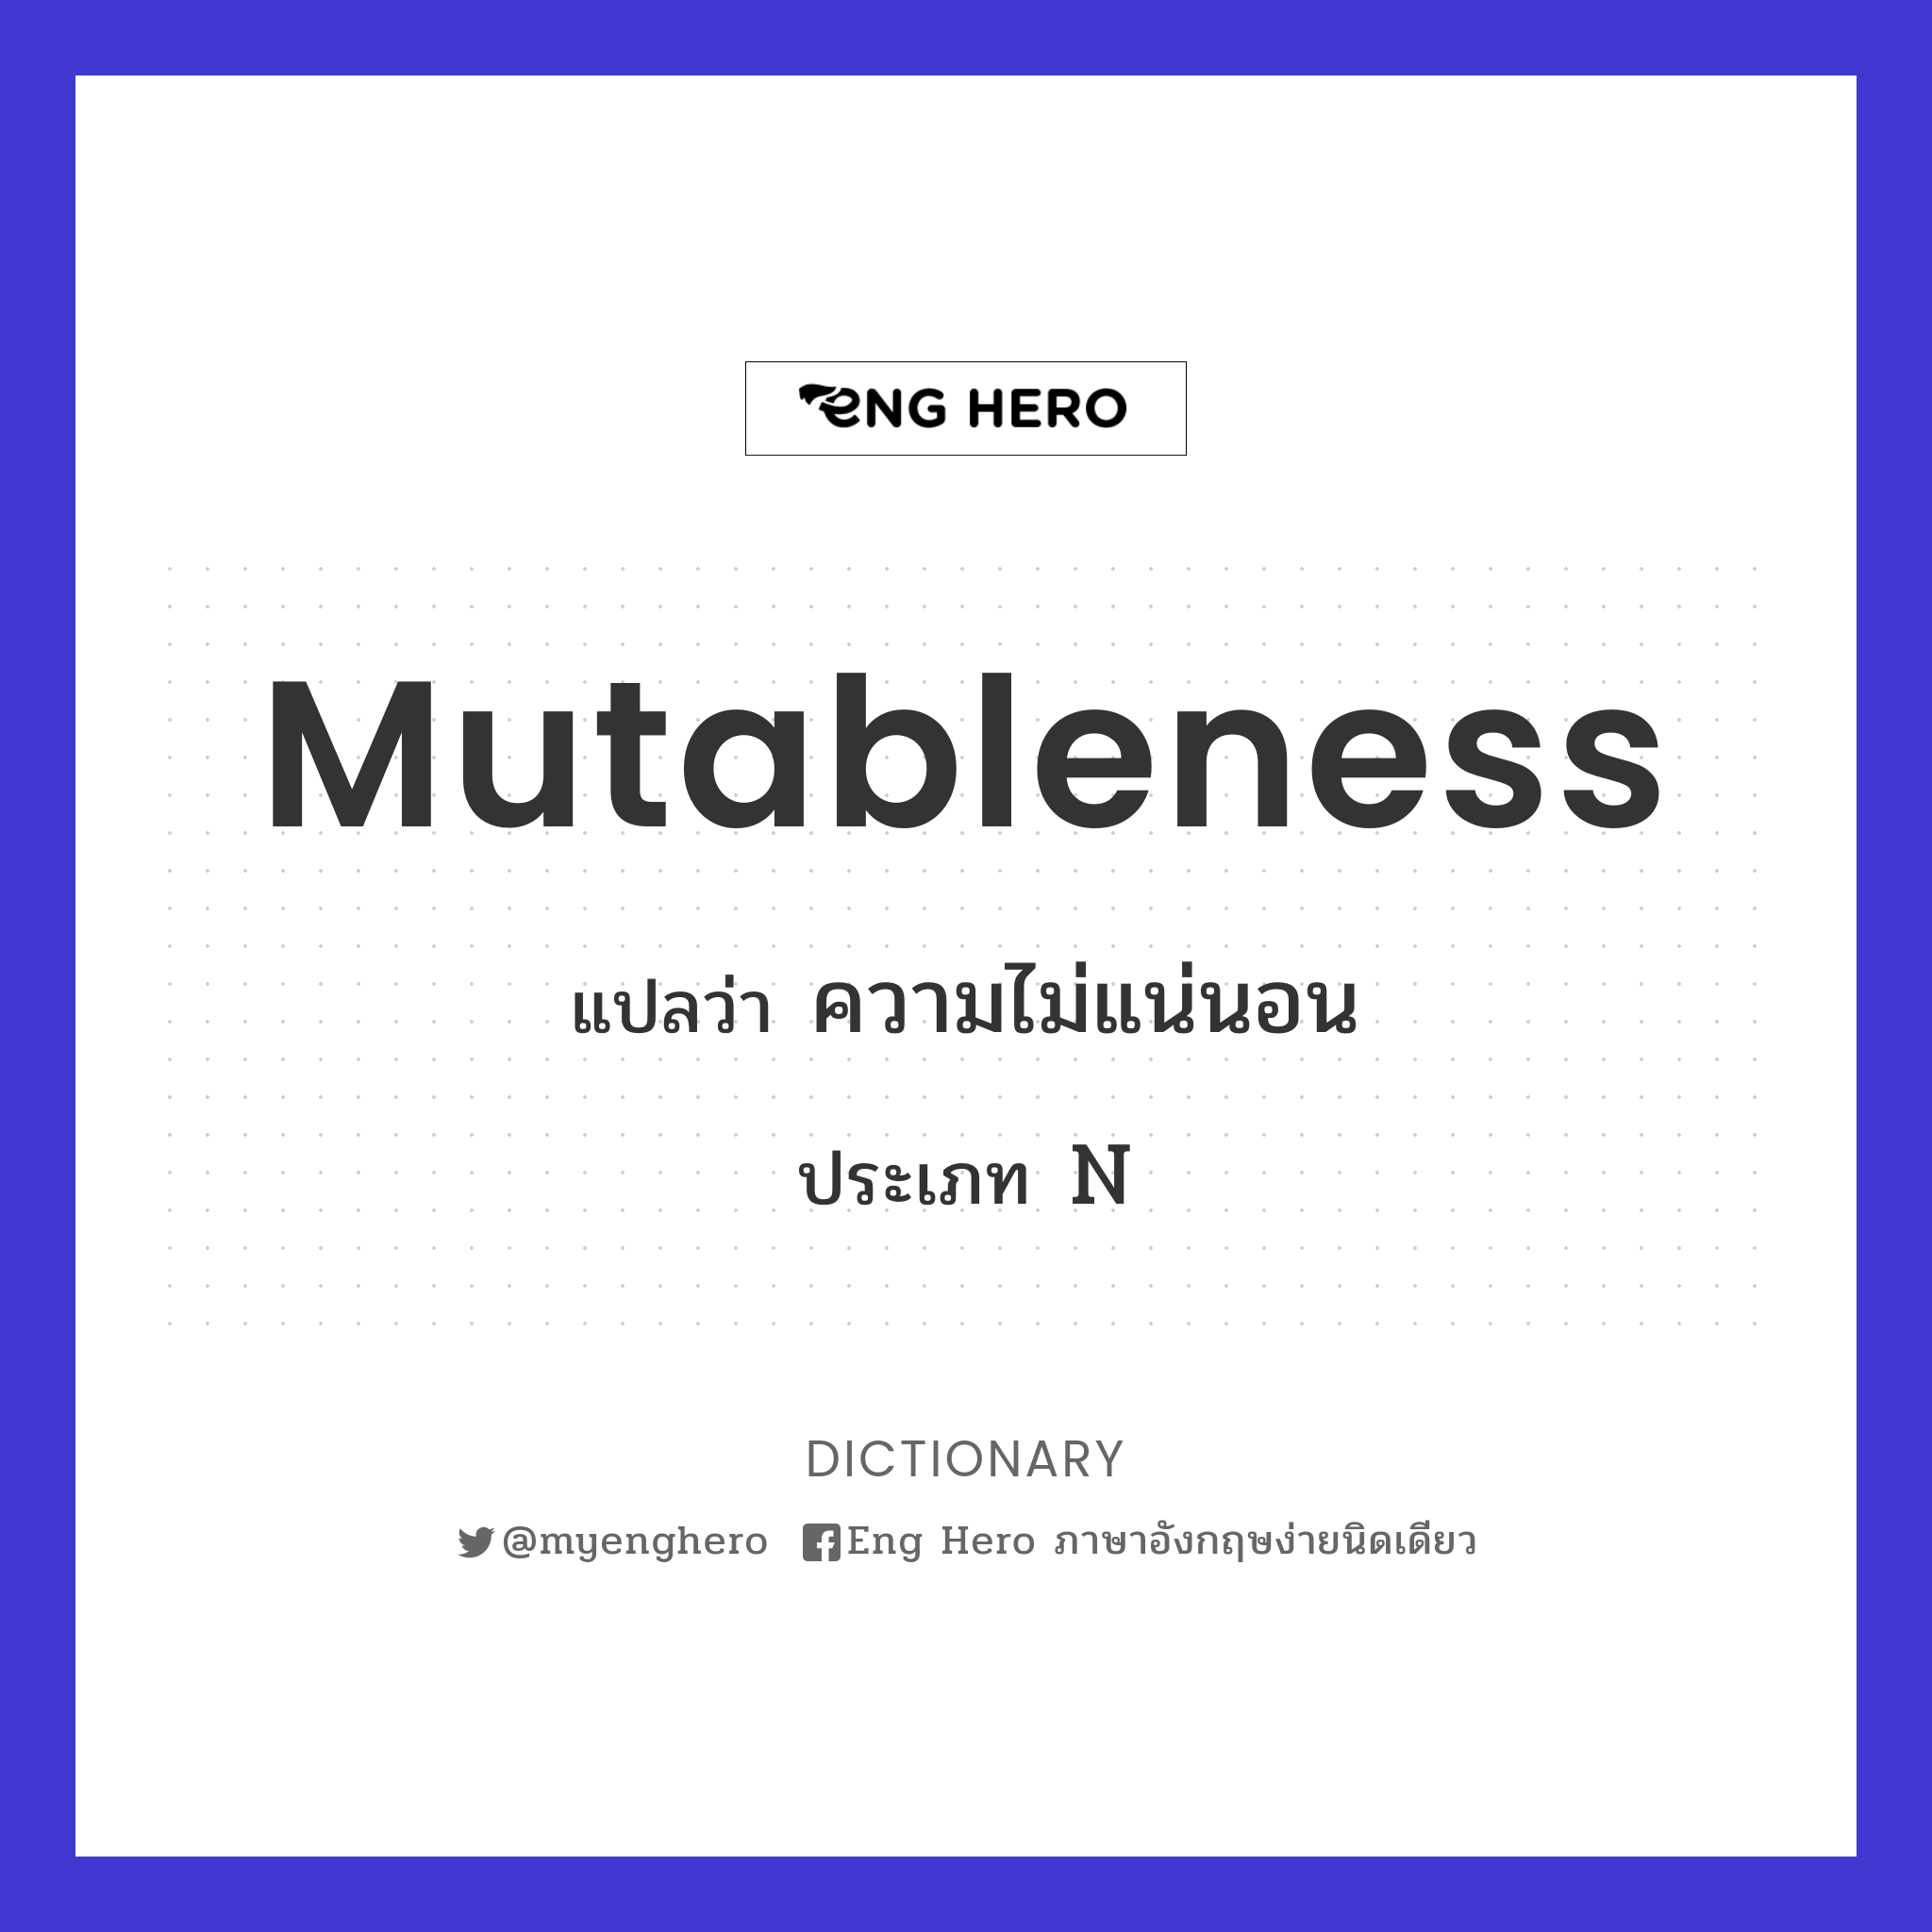 mutableness